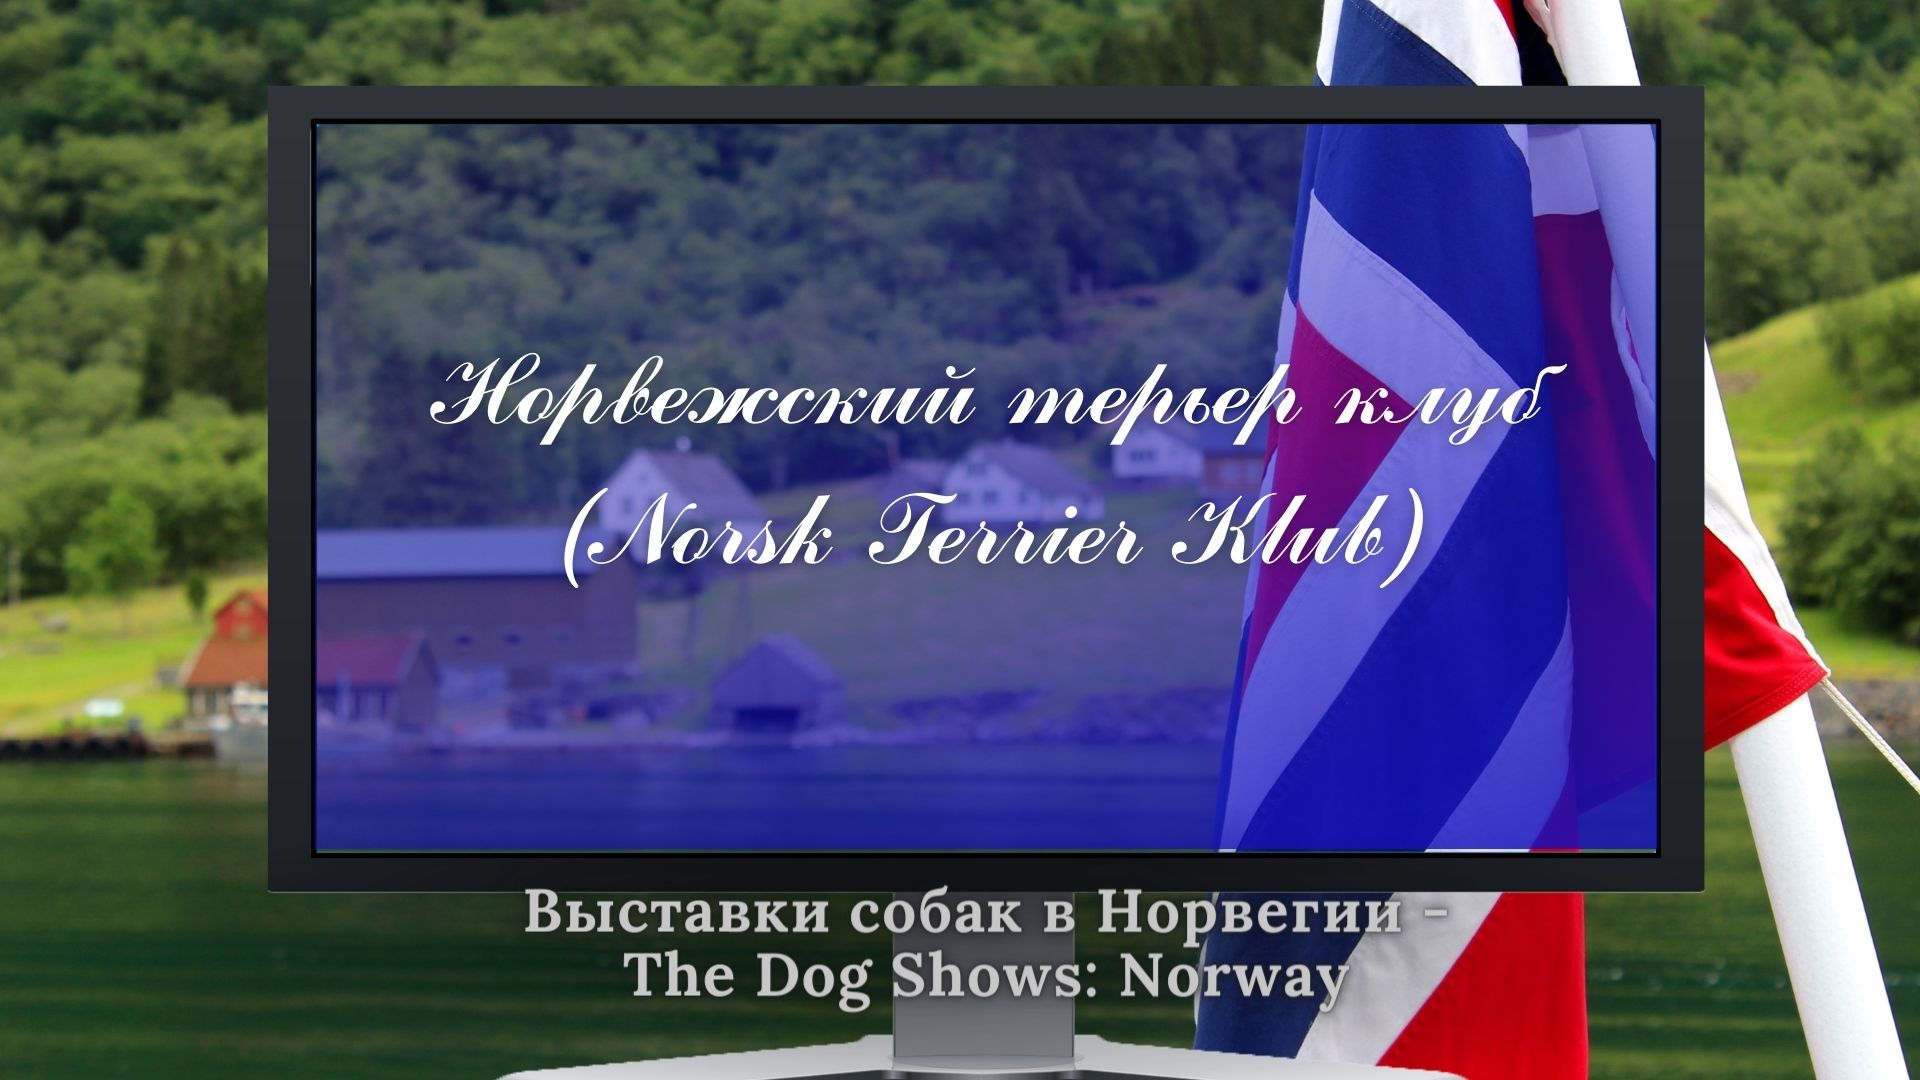 Выставка собак норвежского терьер клуба - Norsk Terrier Klub (первая половина XX века)